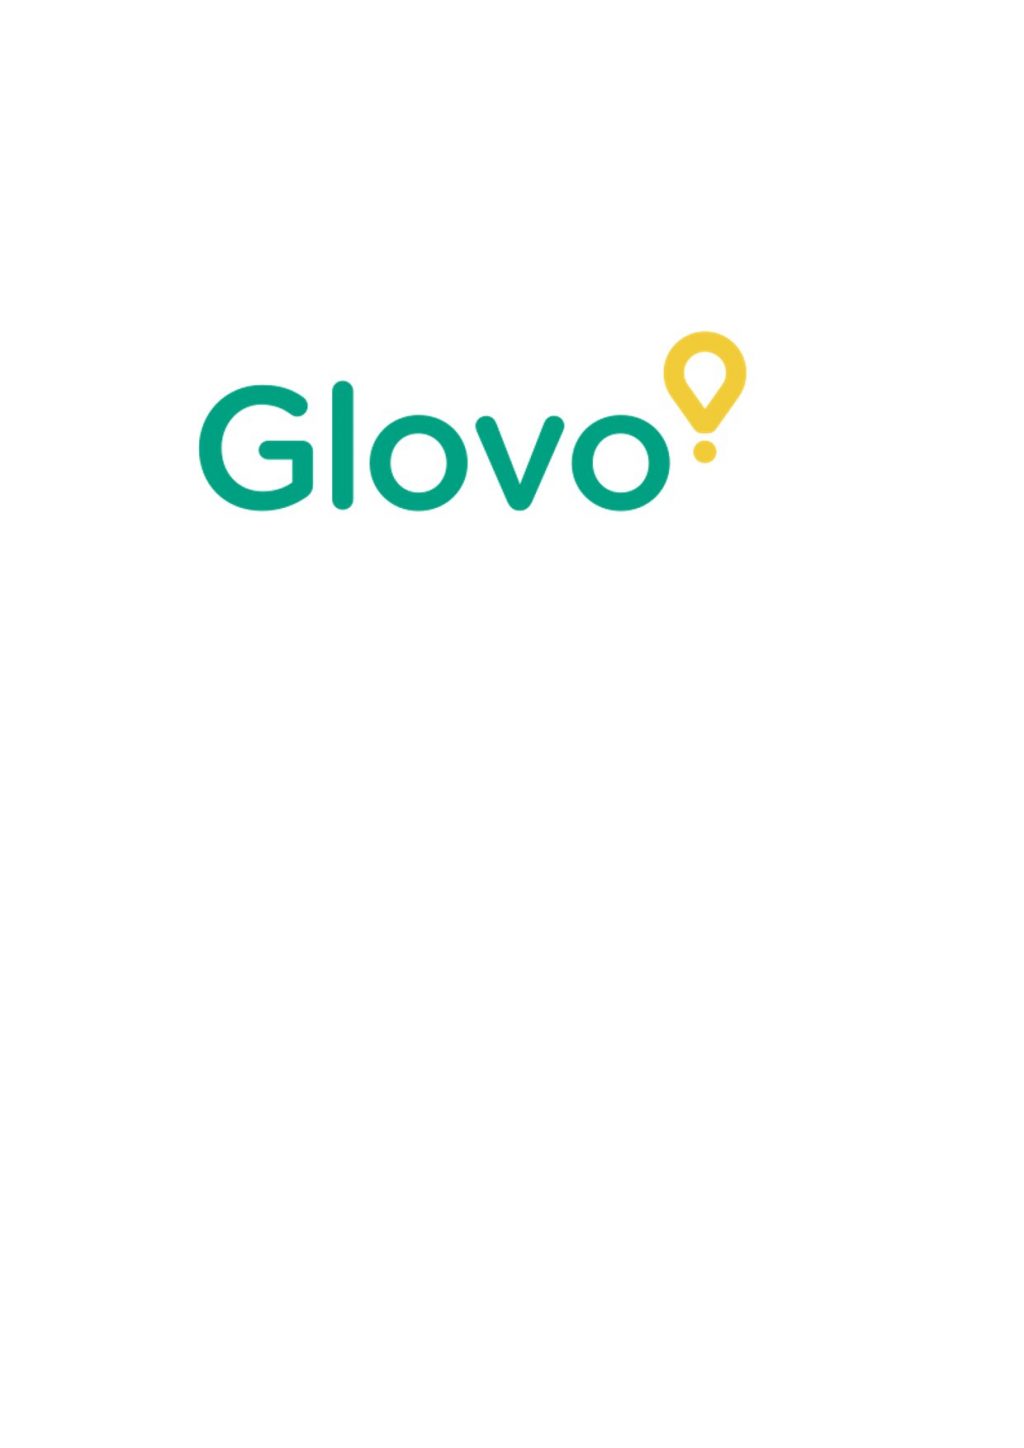 Logo GLovo-1.jpg